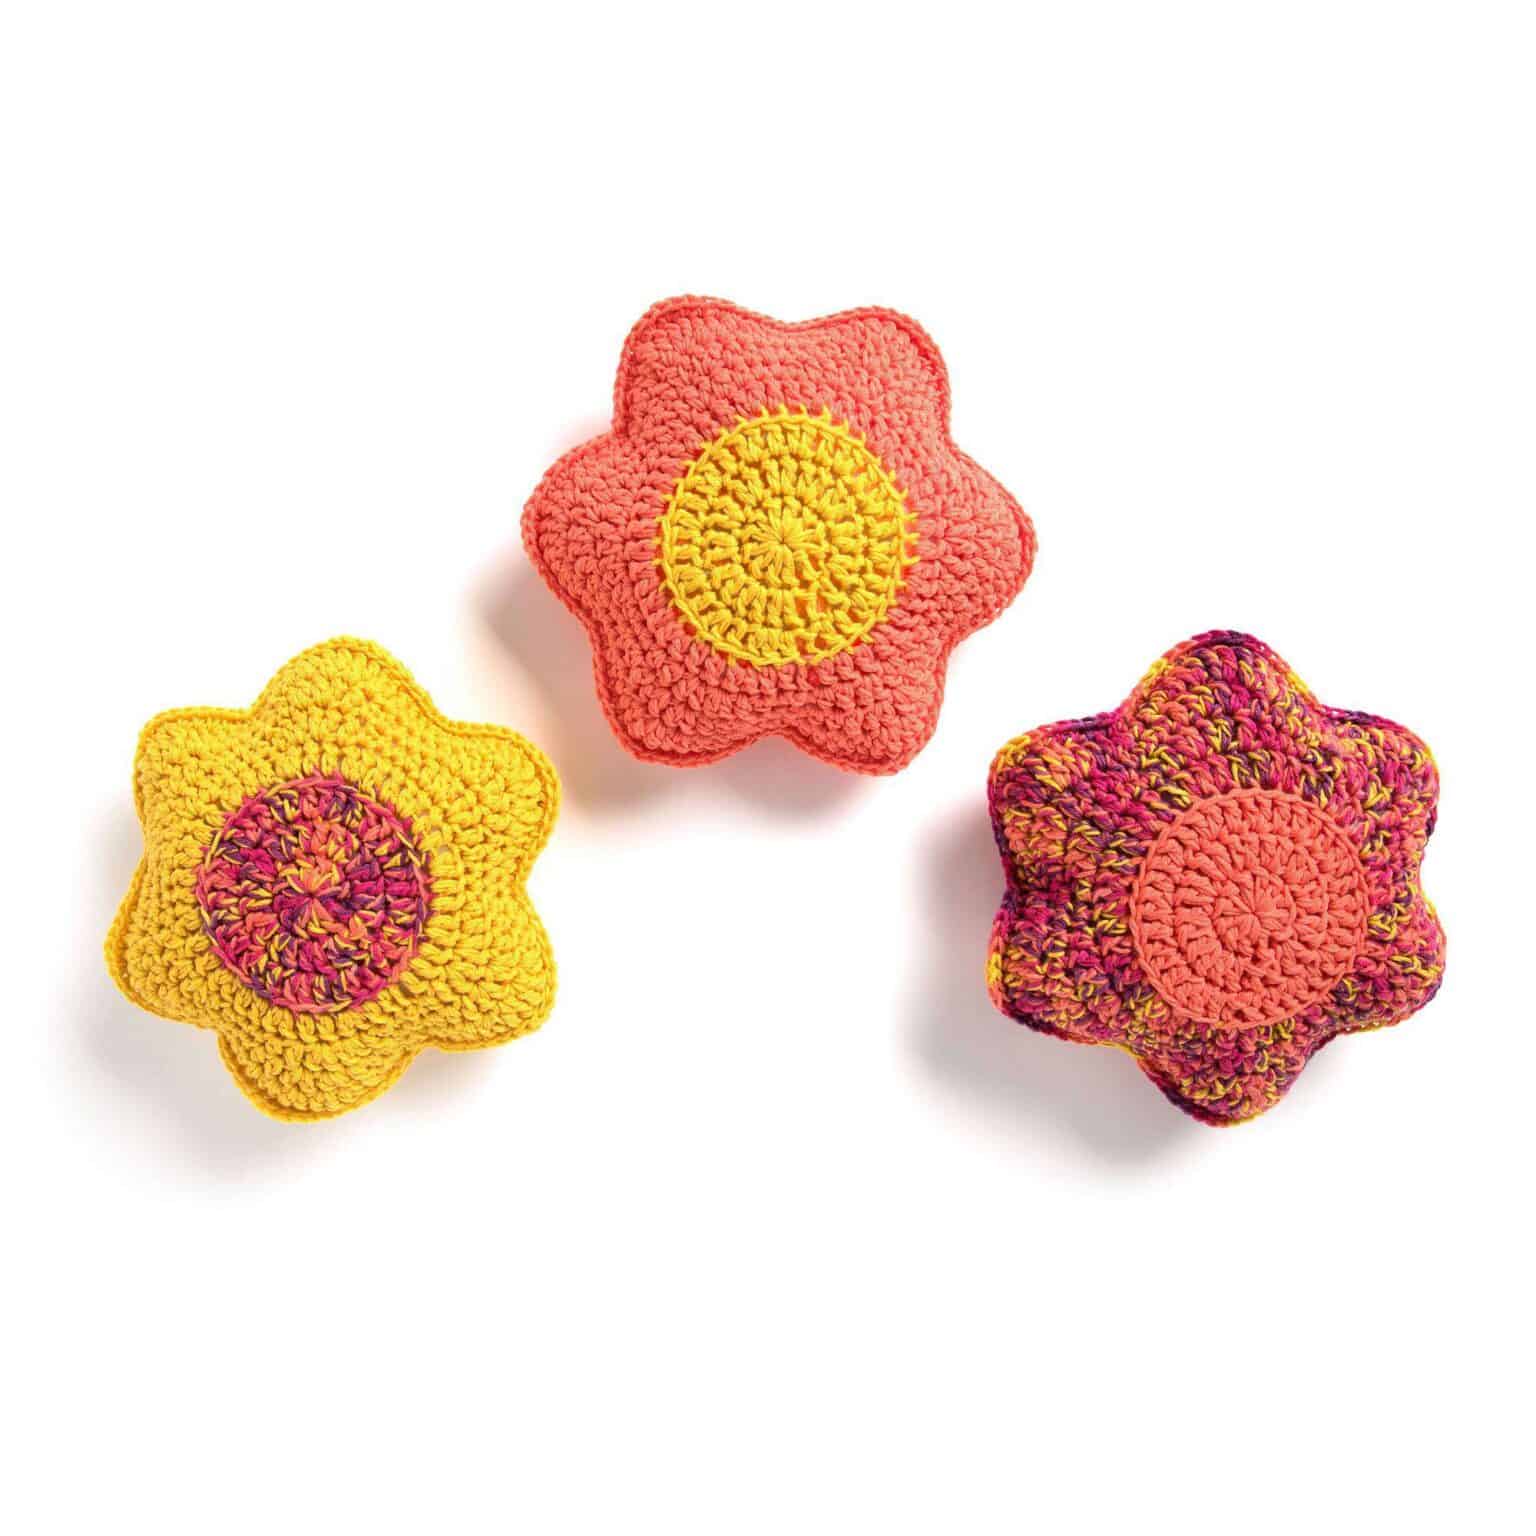 15 Free Crochet Flowers, Sunshine and Rainbow Patterns - Daisy Farm Crafts